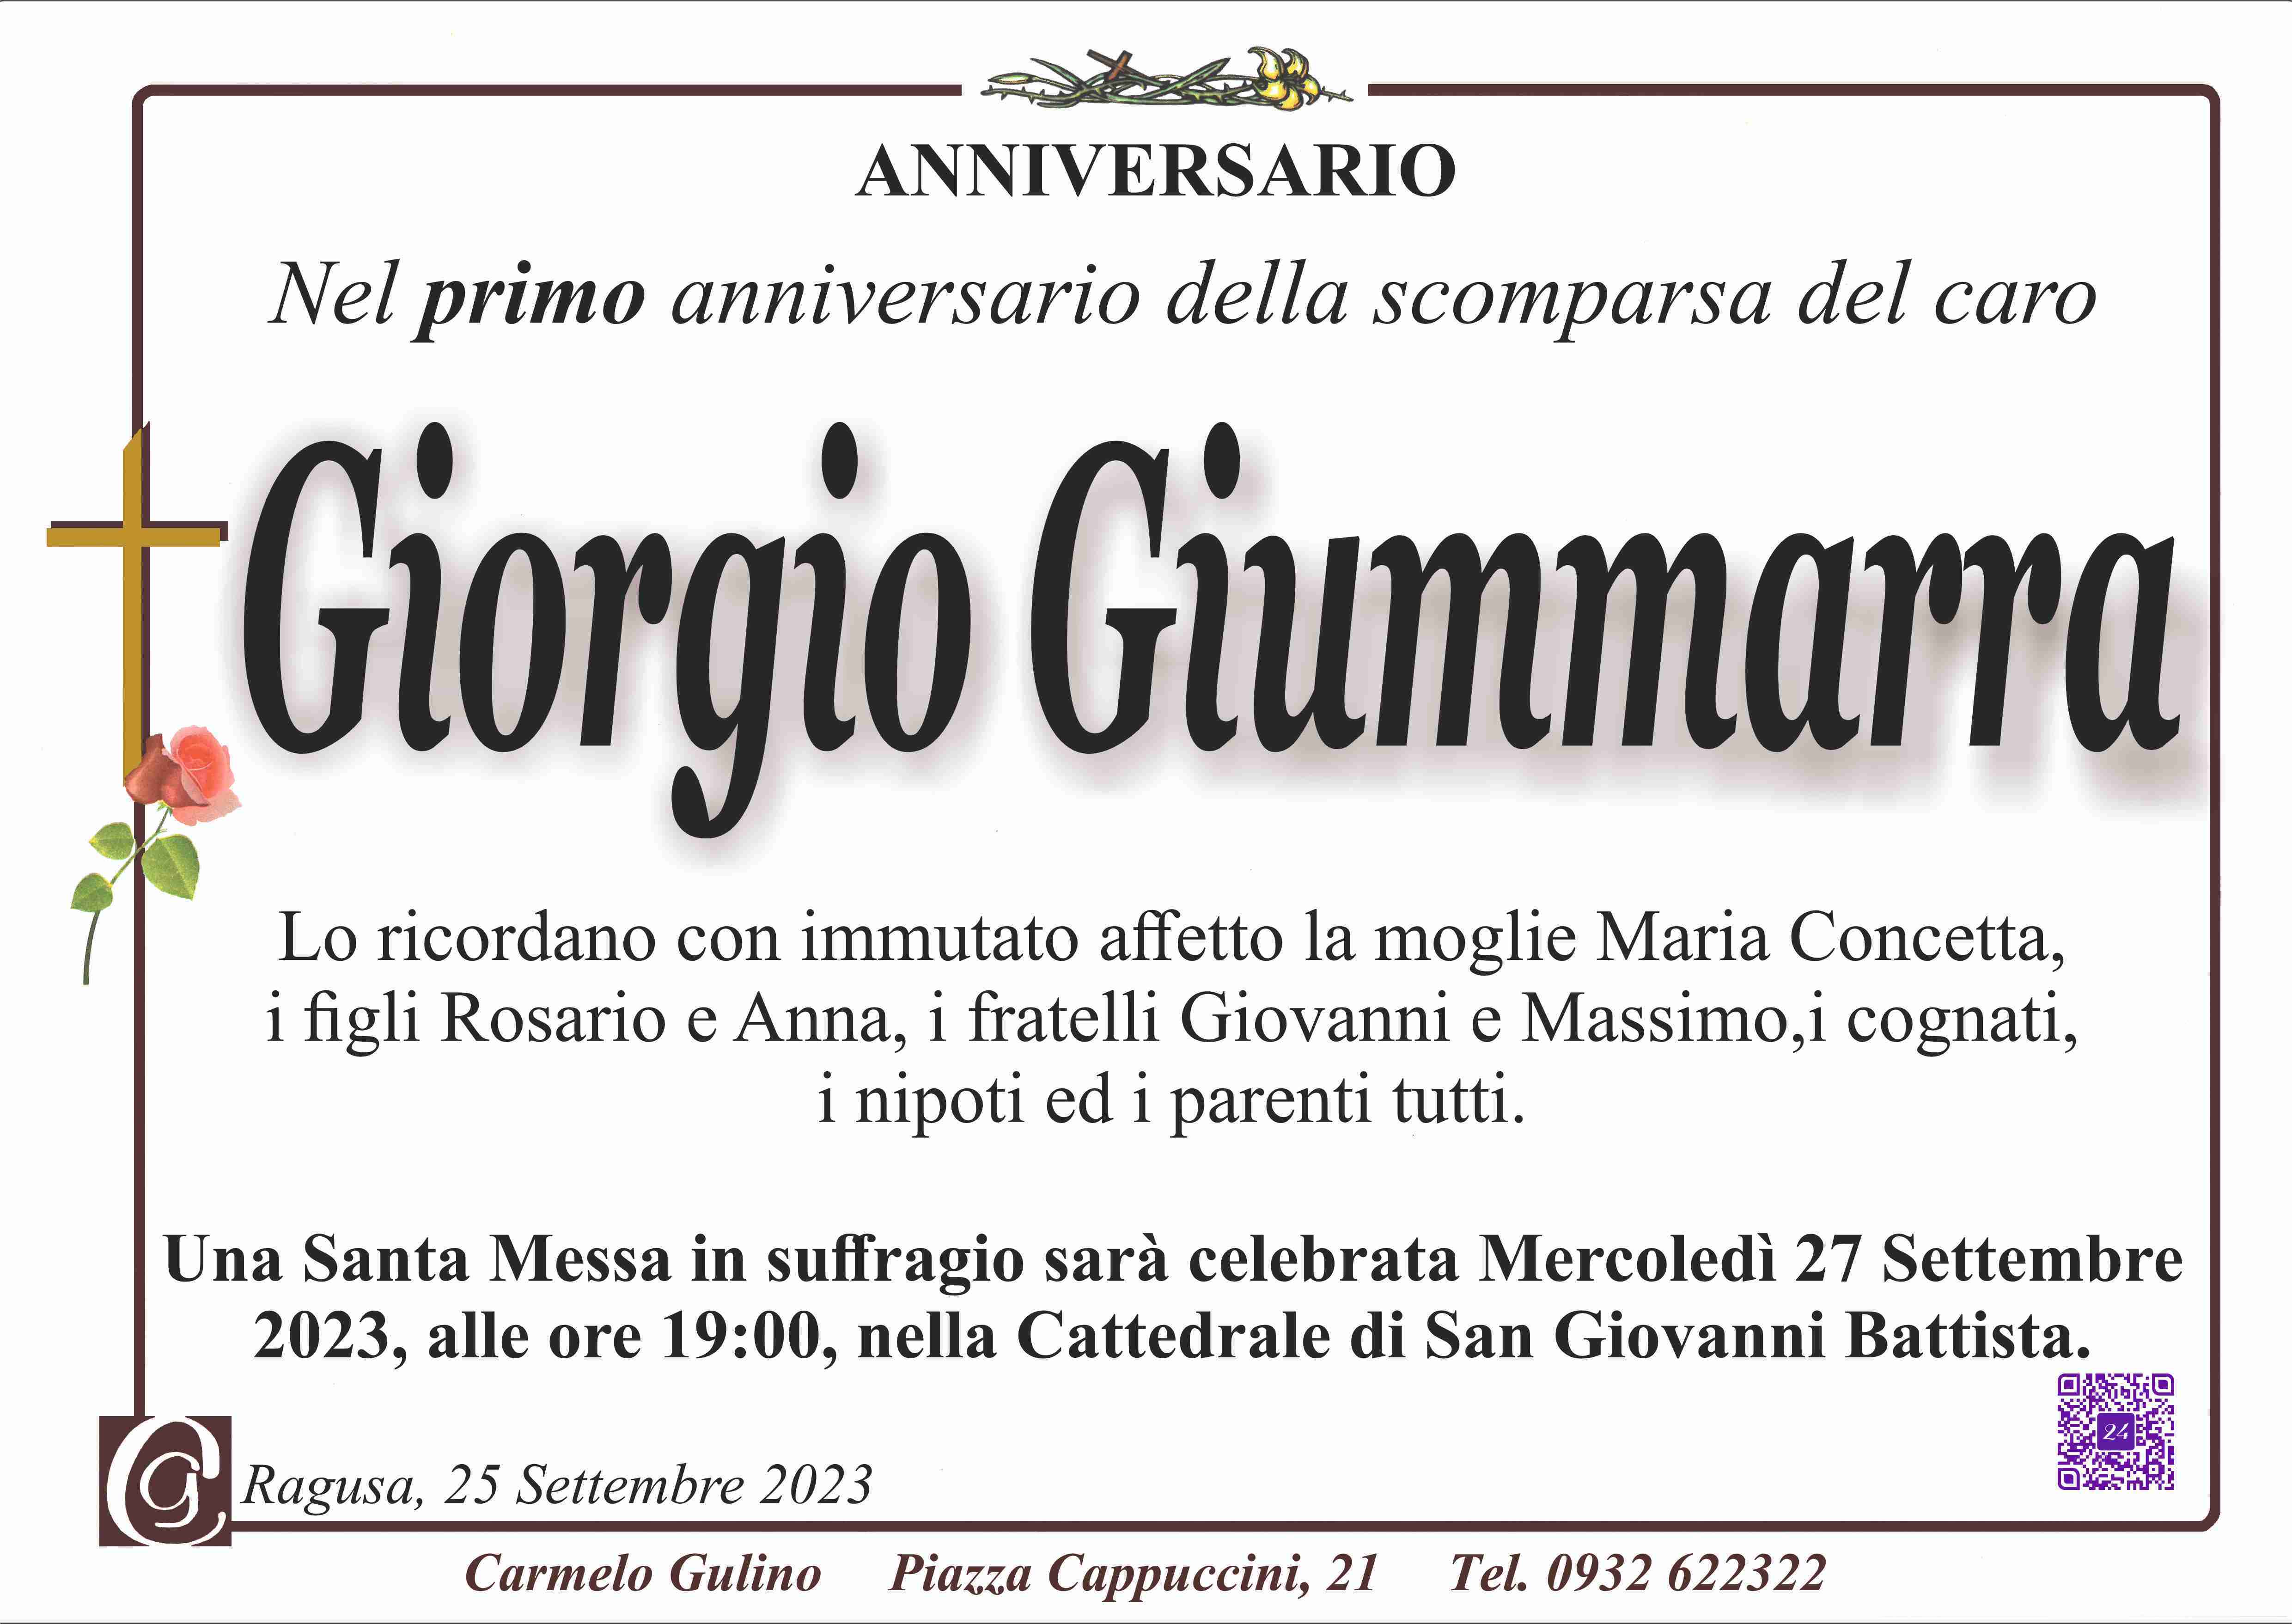 Giorgio Giummarra